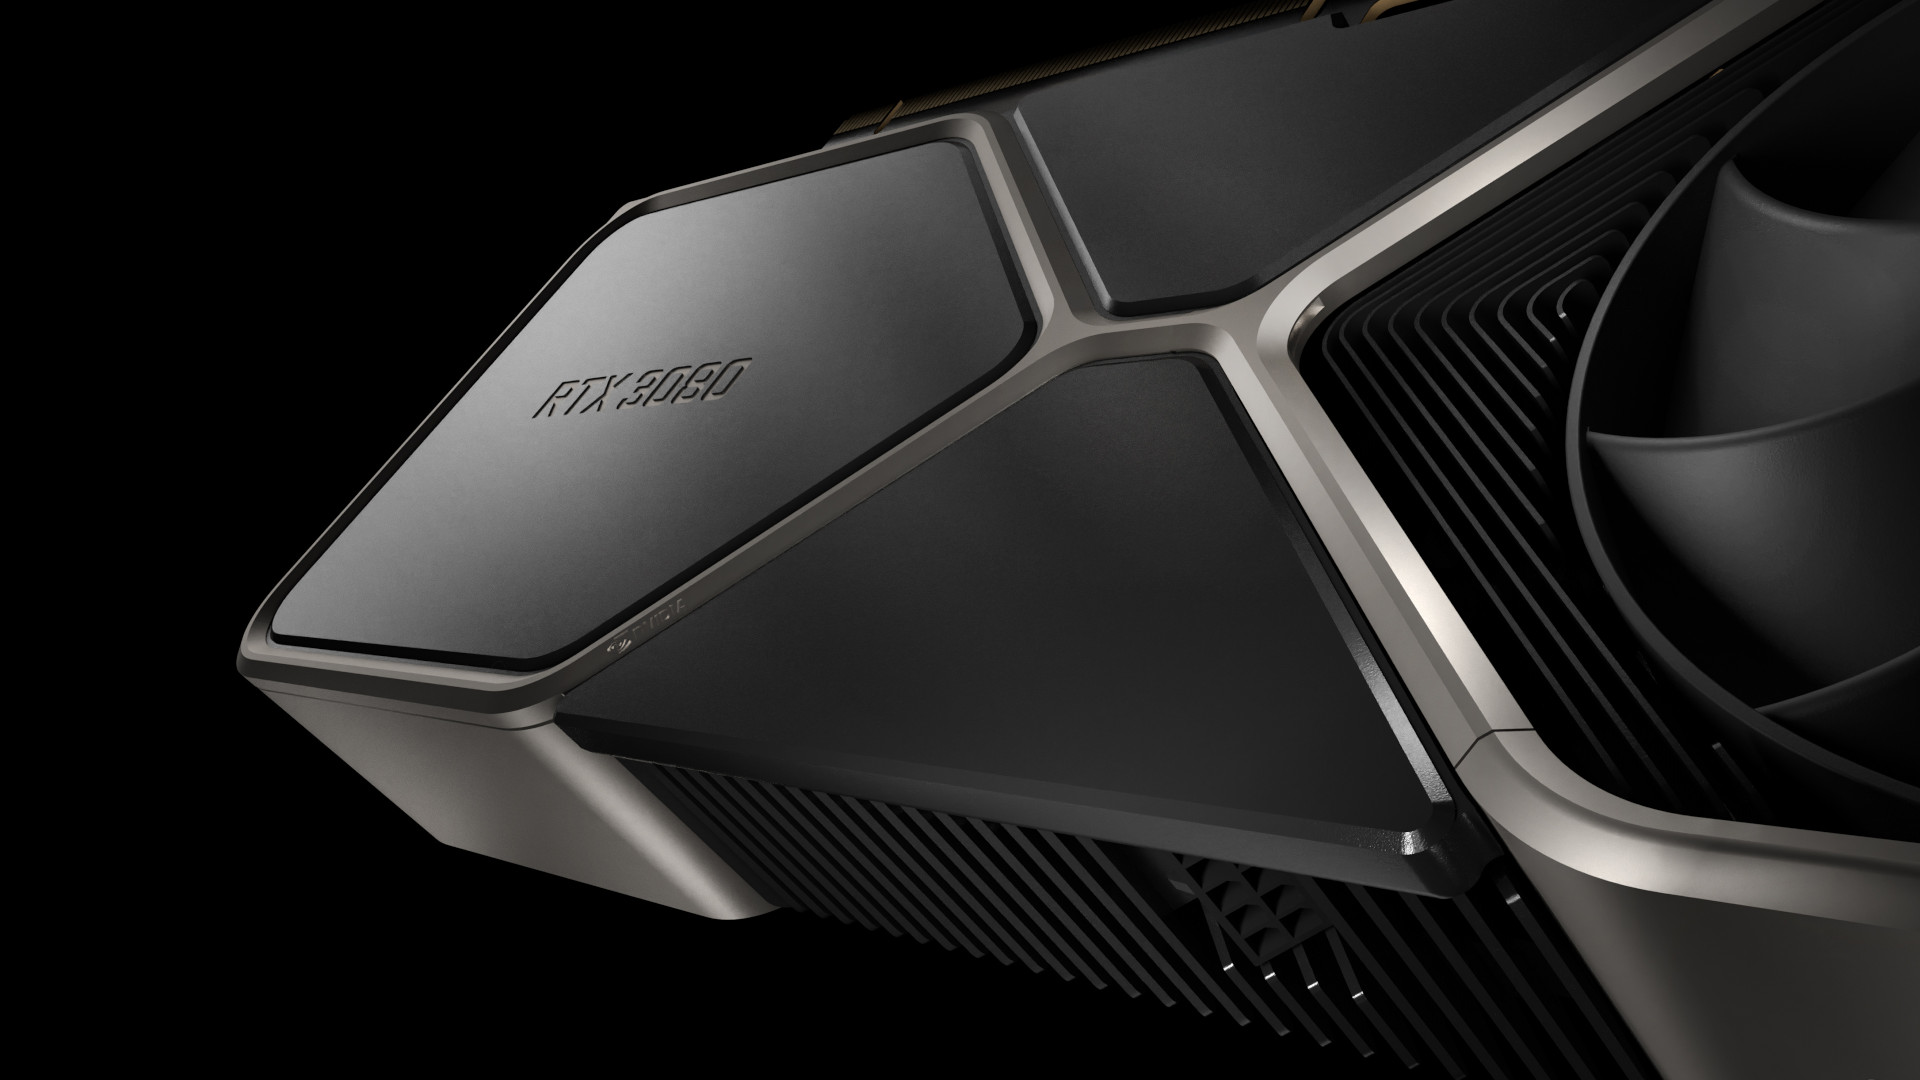 A new Nvidia GeForce RTX 3080 GPU with 12GB of VRAM may be revealed tomorrow